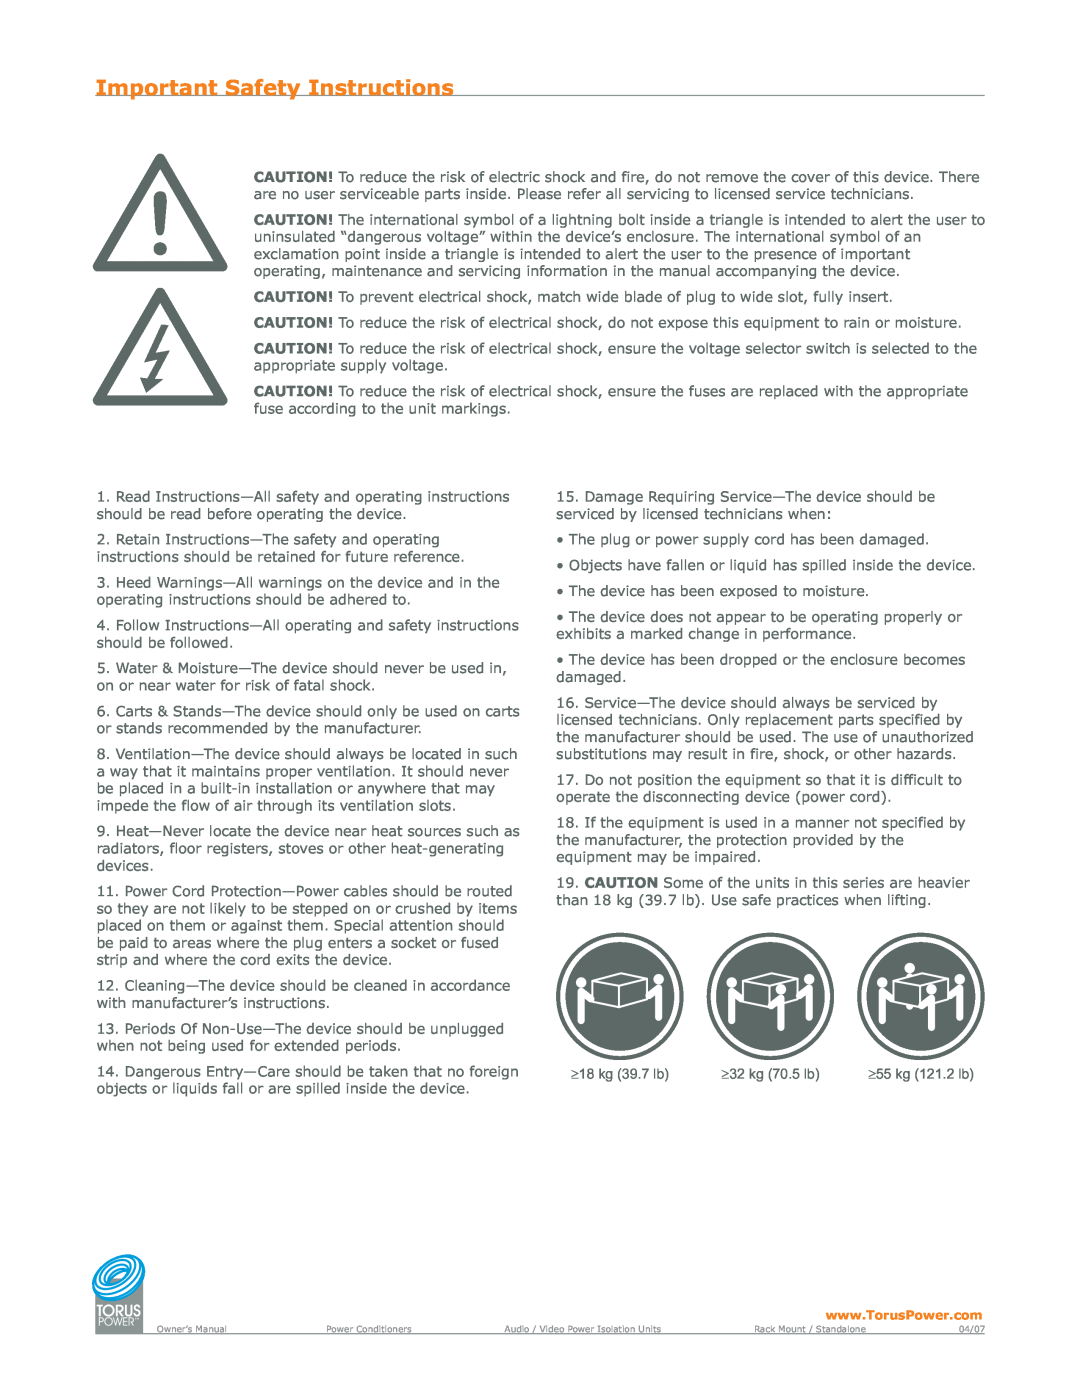 Torus Power A024-HCB-A1AB manual Important Safety Instructions, 18 kg 39.7 lb, 32 kg 70.5 lb 